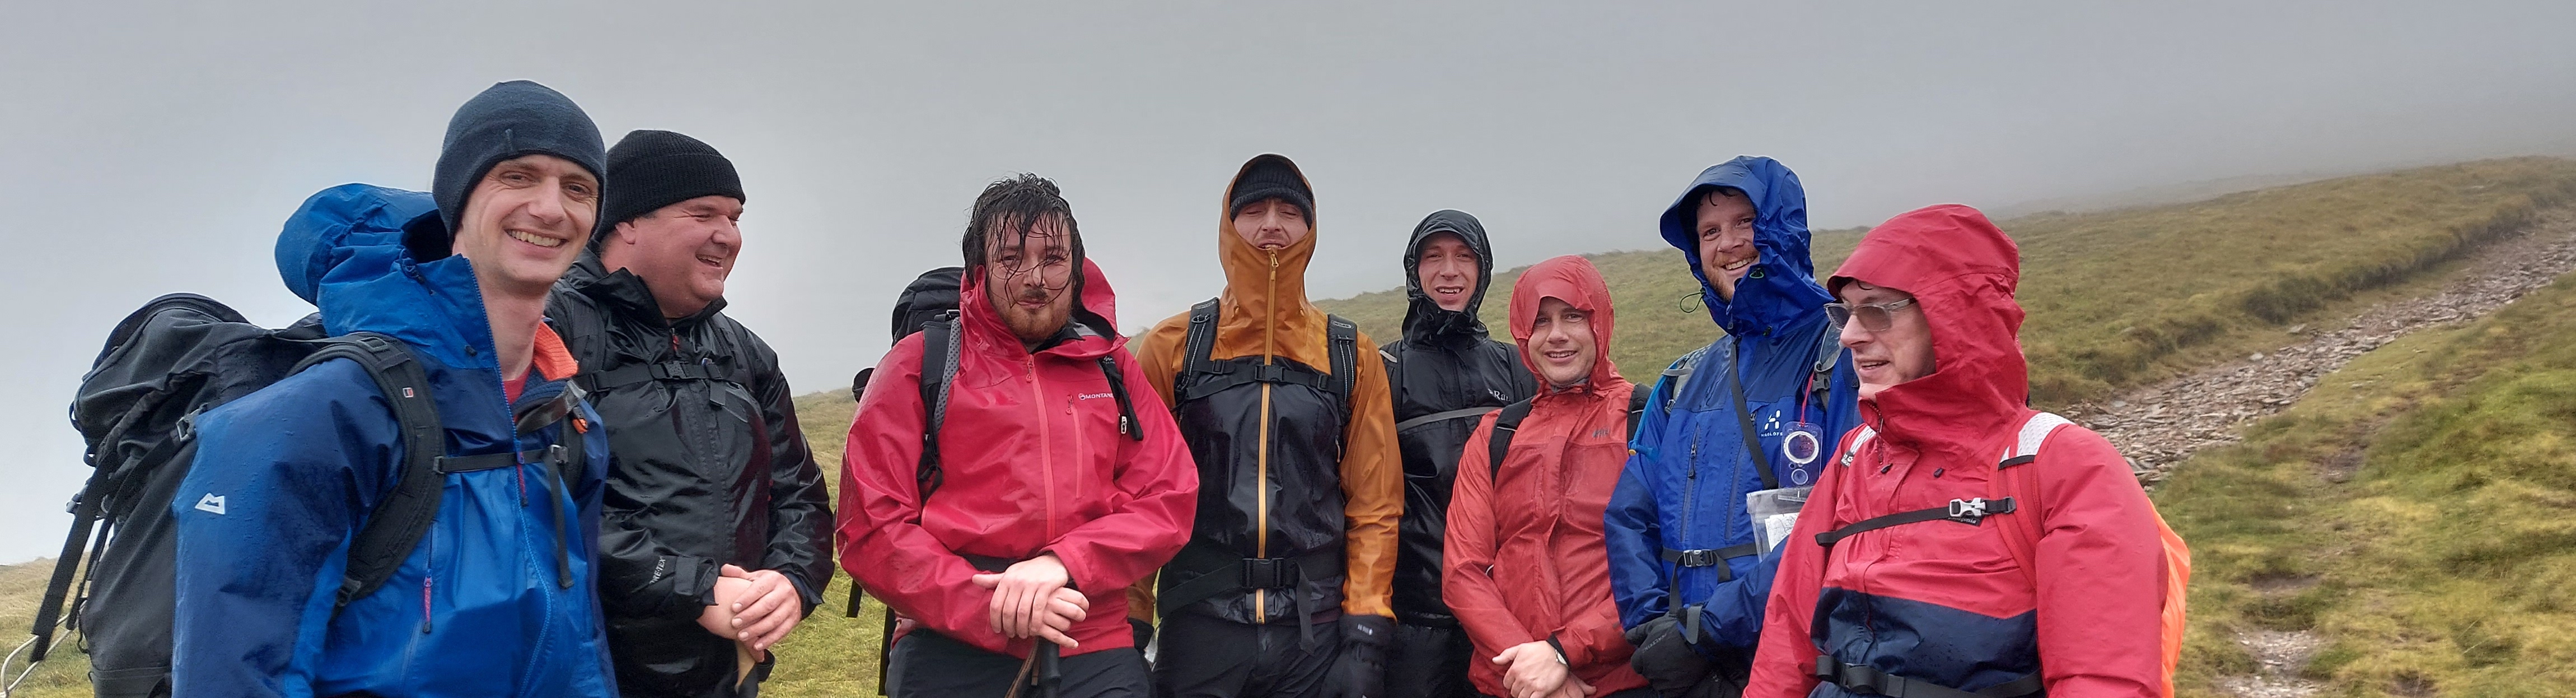 OutdoorLads Members in waterproof jackets in the rain